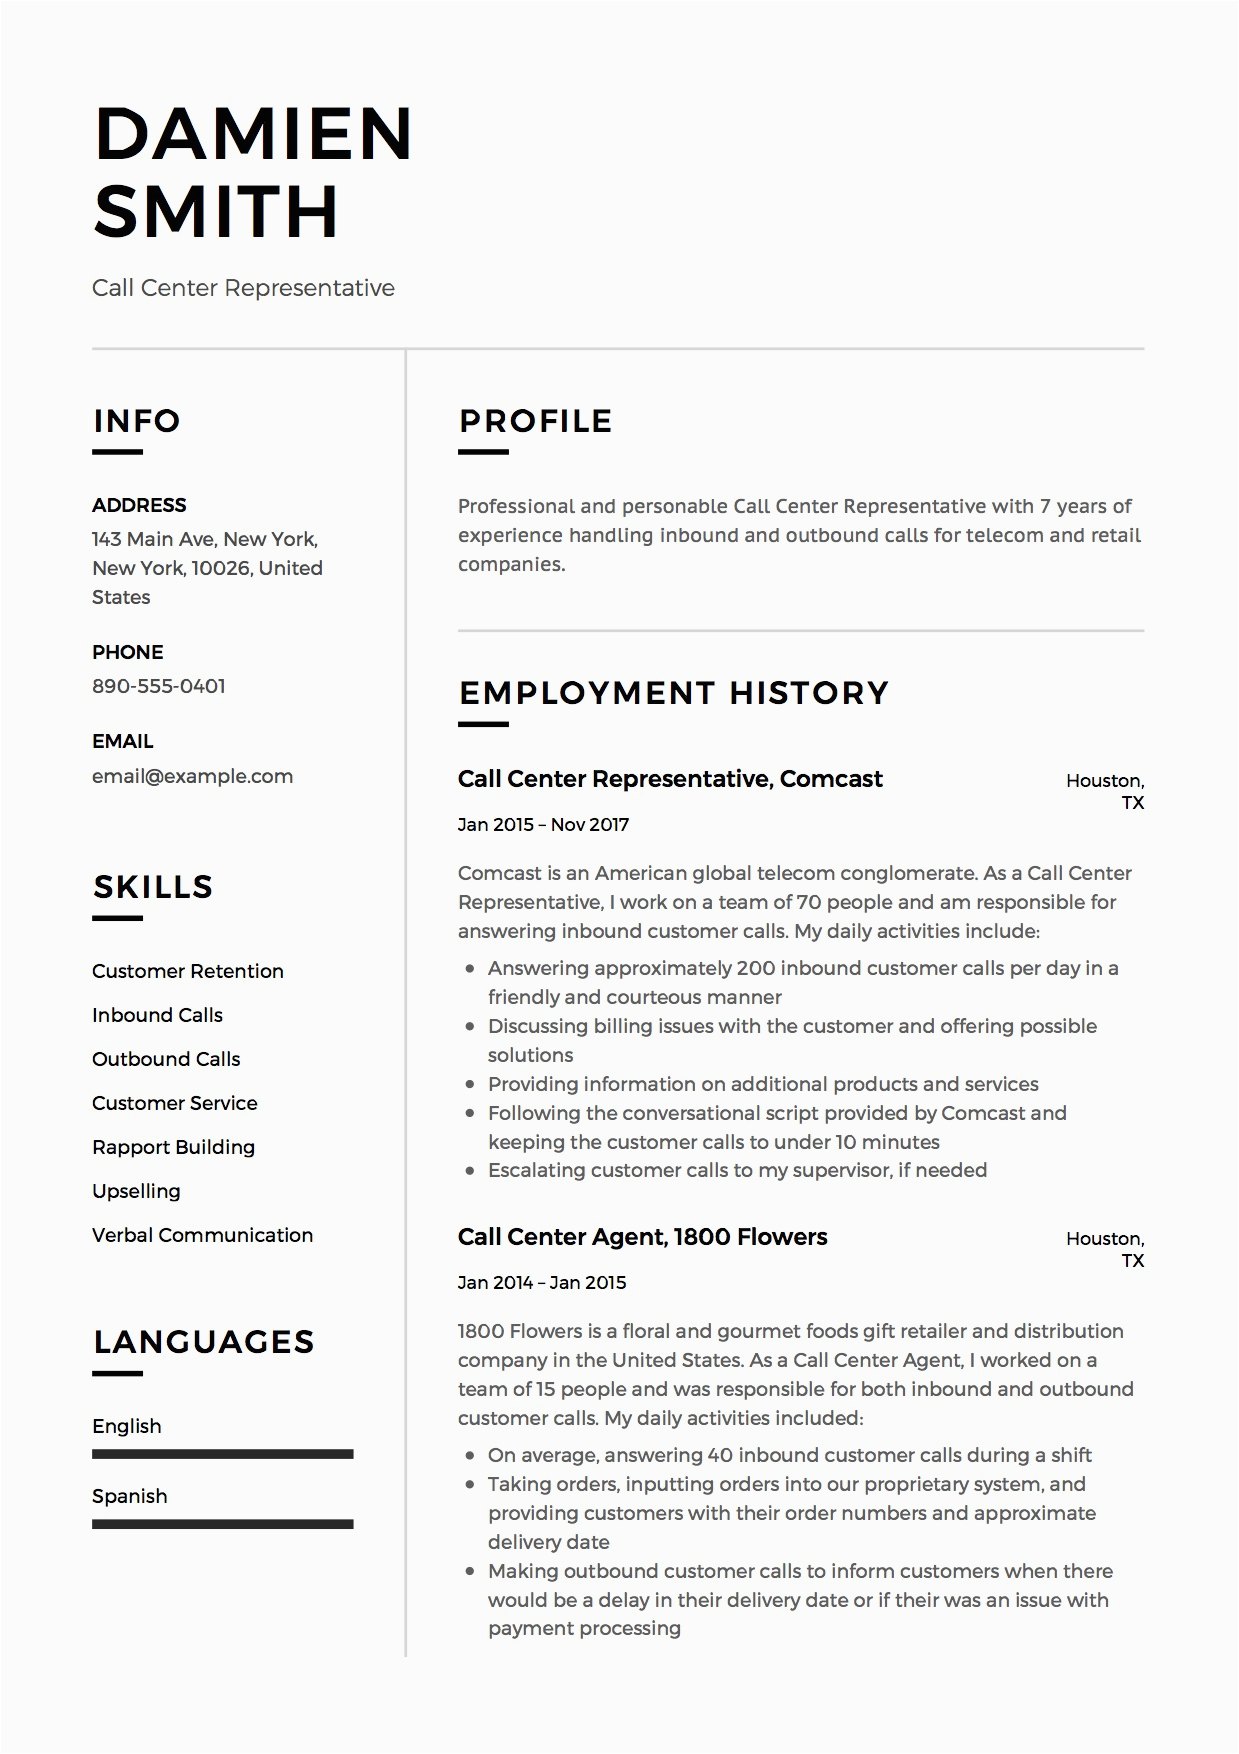 Sample Resume for Call Center Representative Call Center Representative Resume & Guide